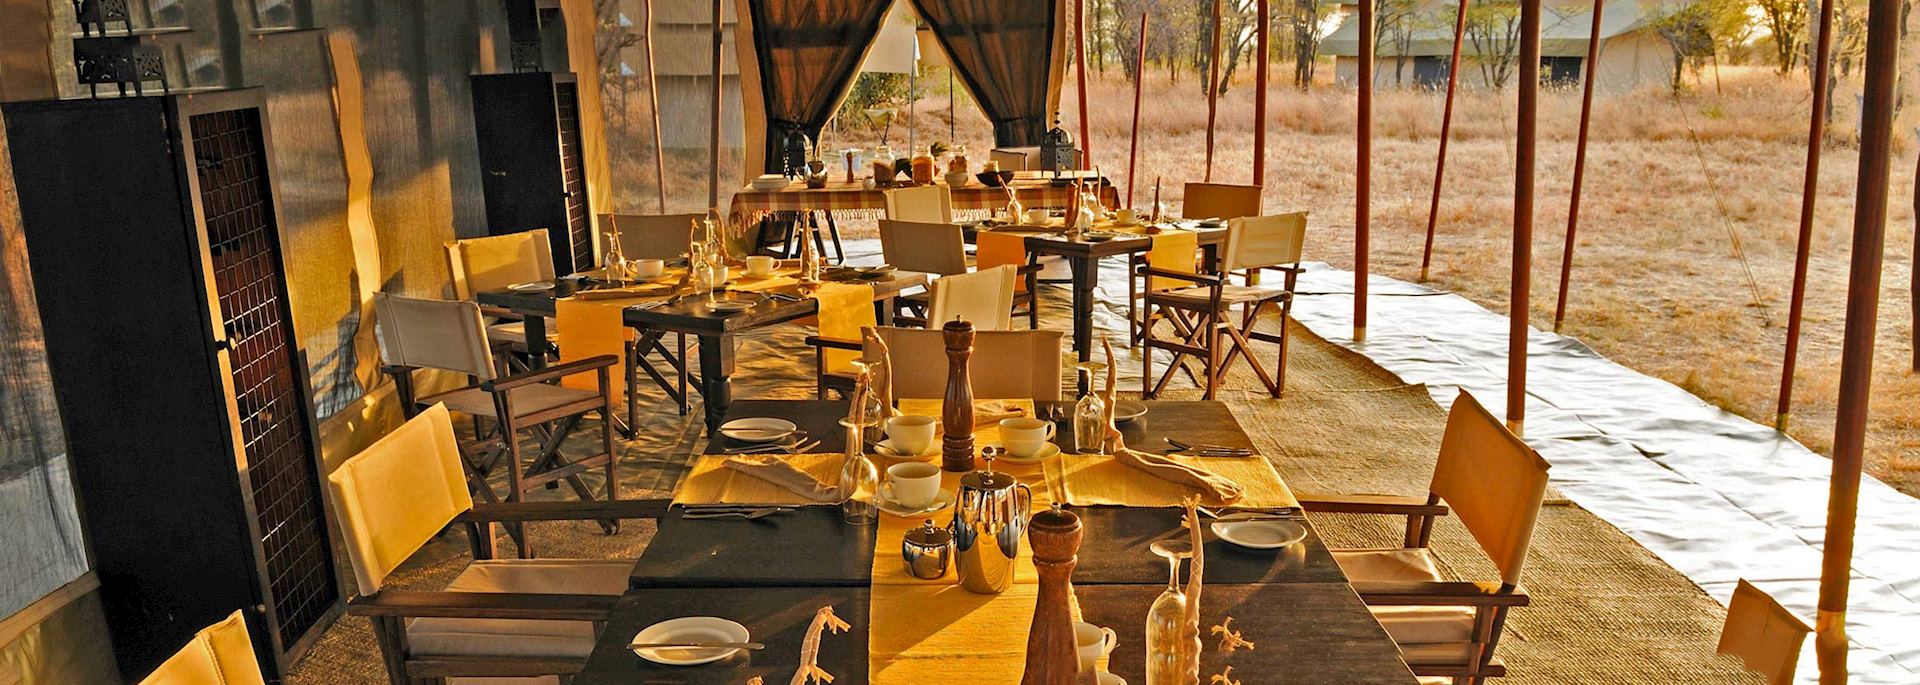 Olakira Mobile Camp, Serengeti National Park